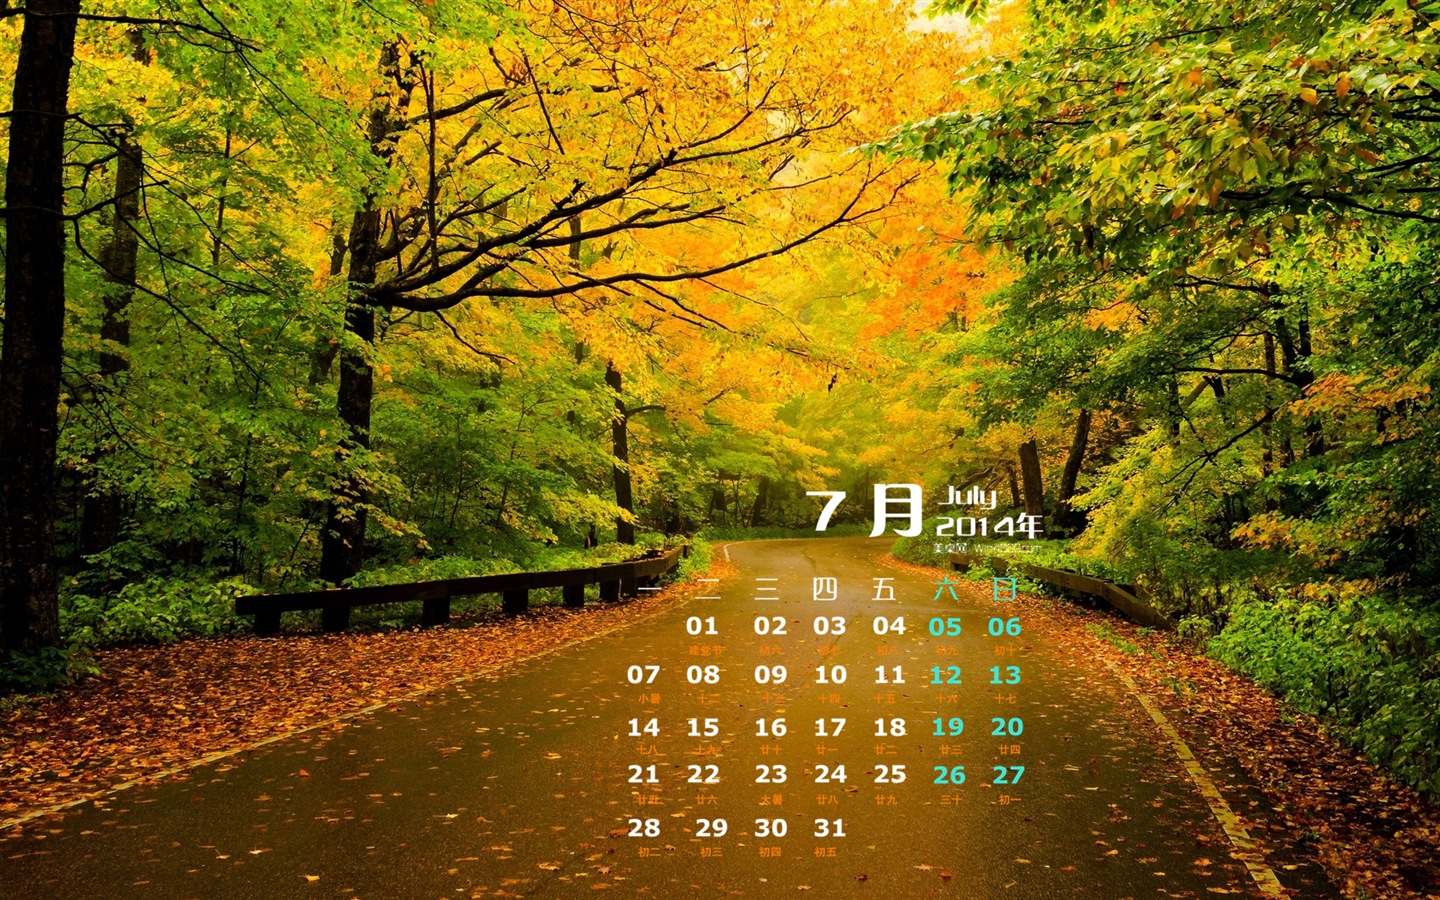 Juli 2014 Kalender Wallpaper (2) #4 - 1440x900